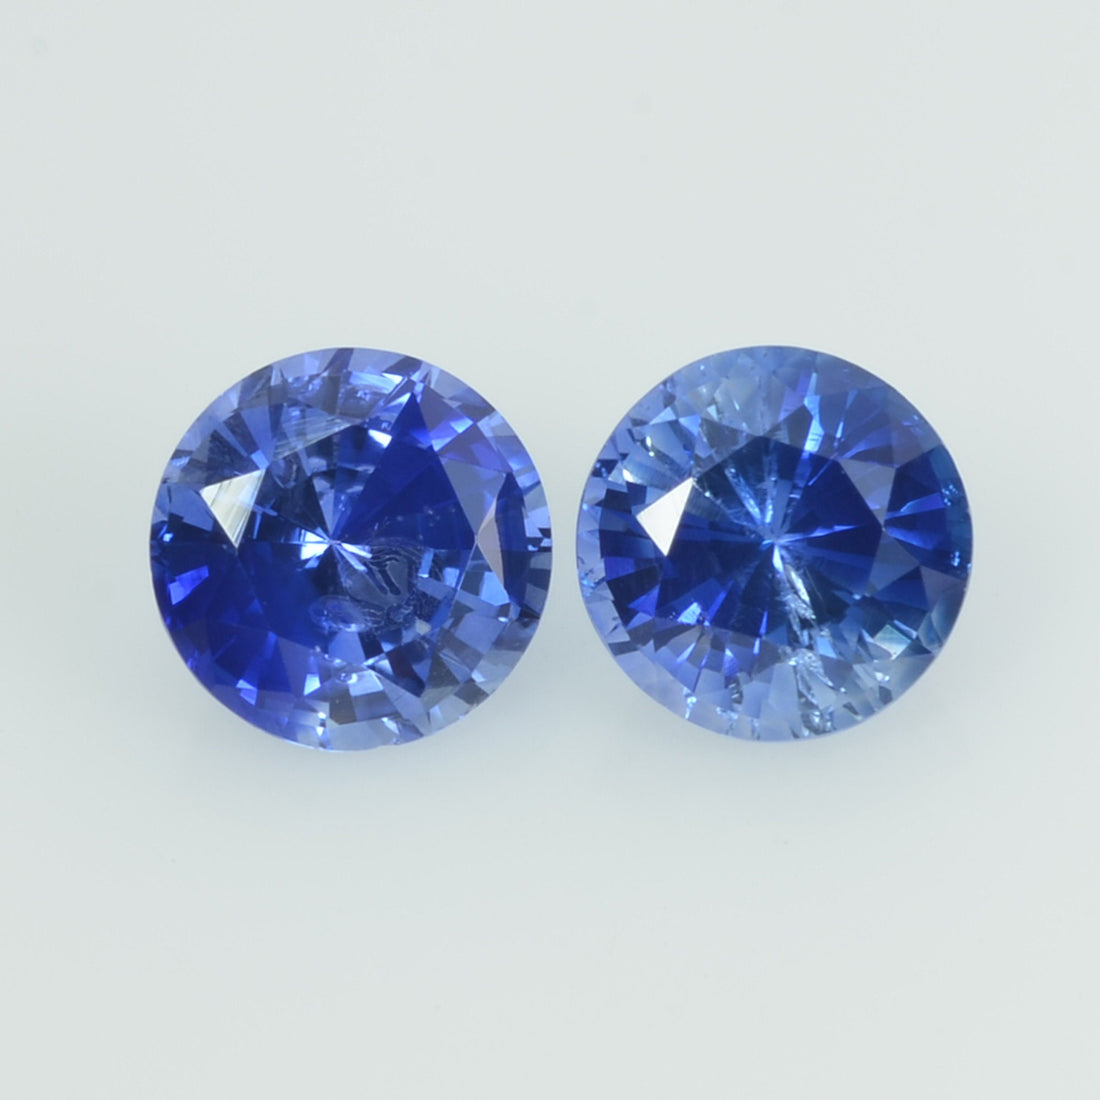 5 mm Natural Blue Sapphire Loose Gemstone Round Cut